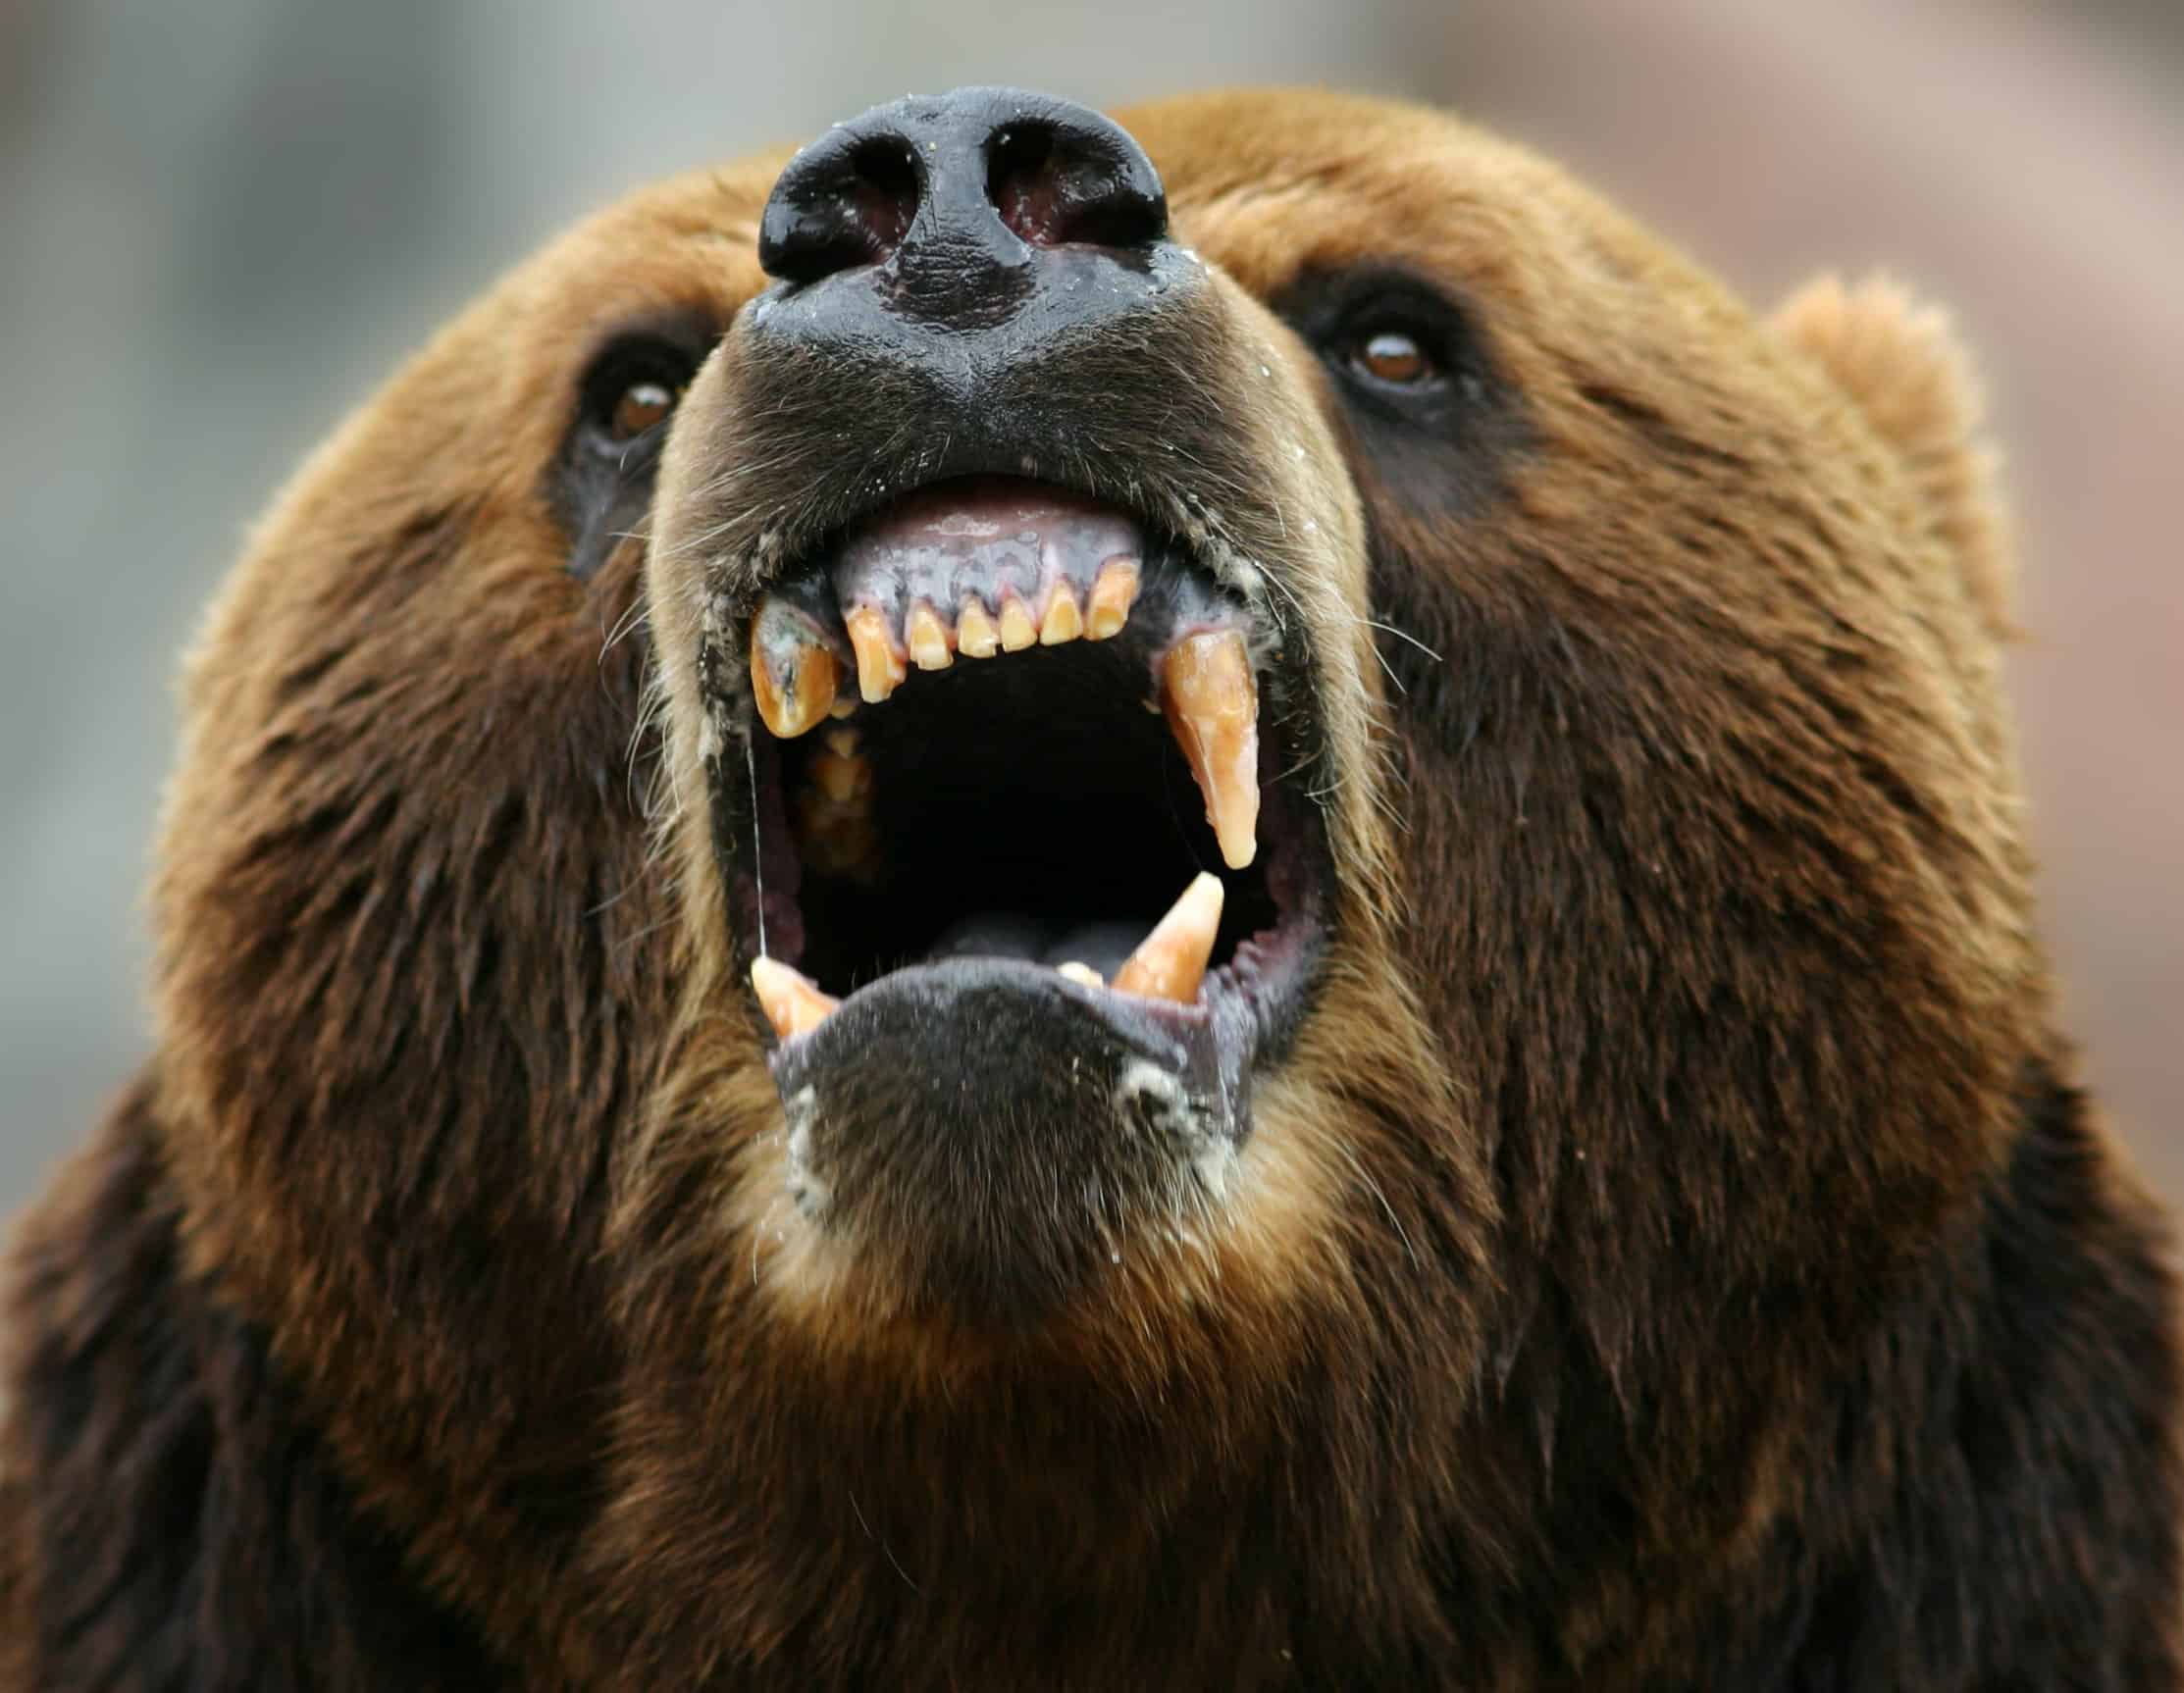 Bear Symbolism & Meaning & the Bear Spirit Animal